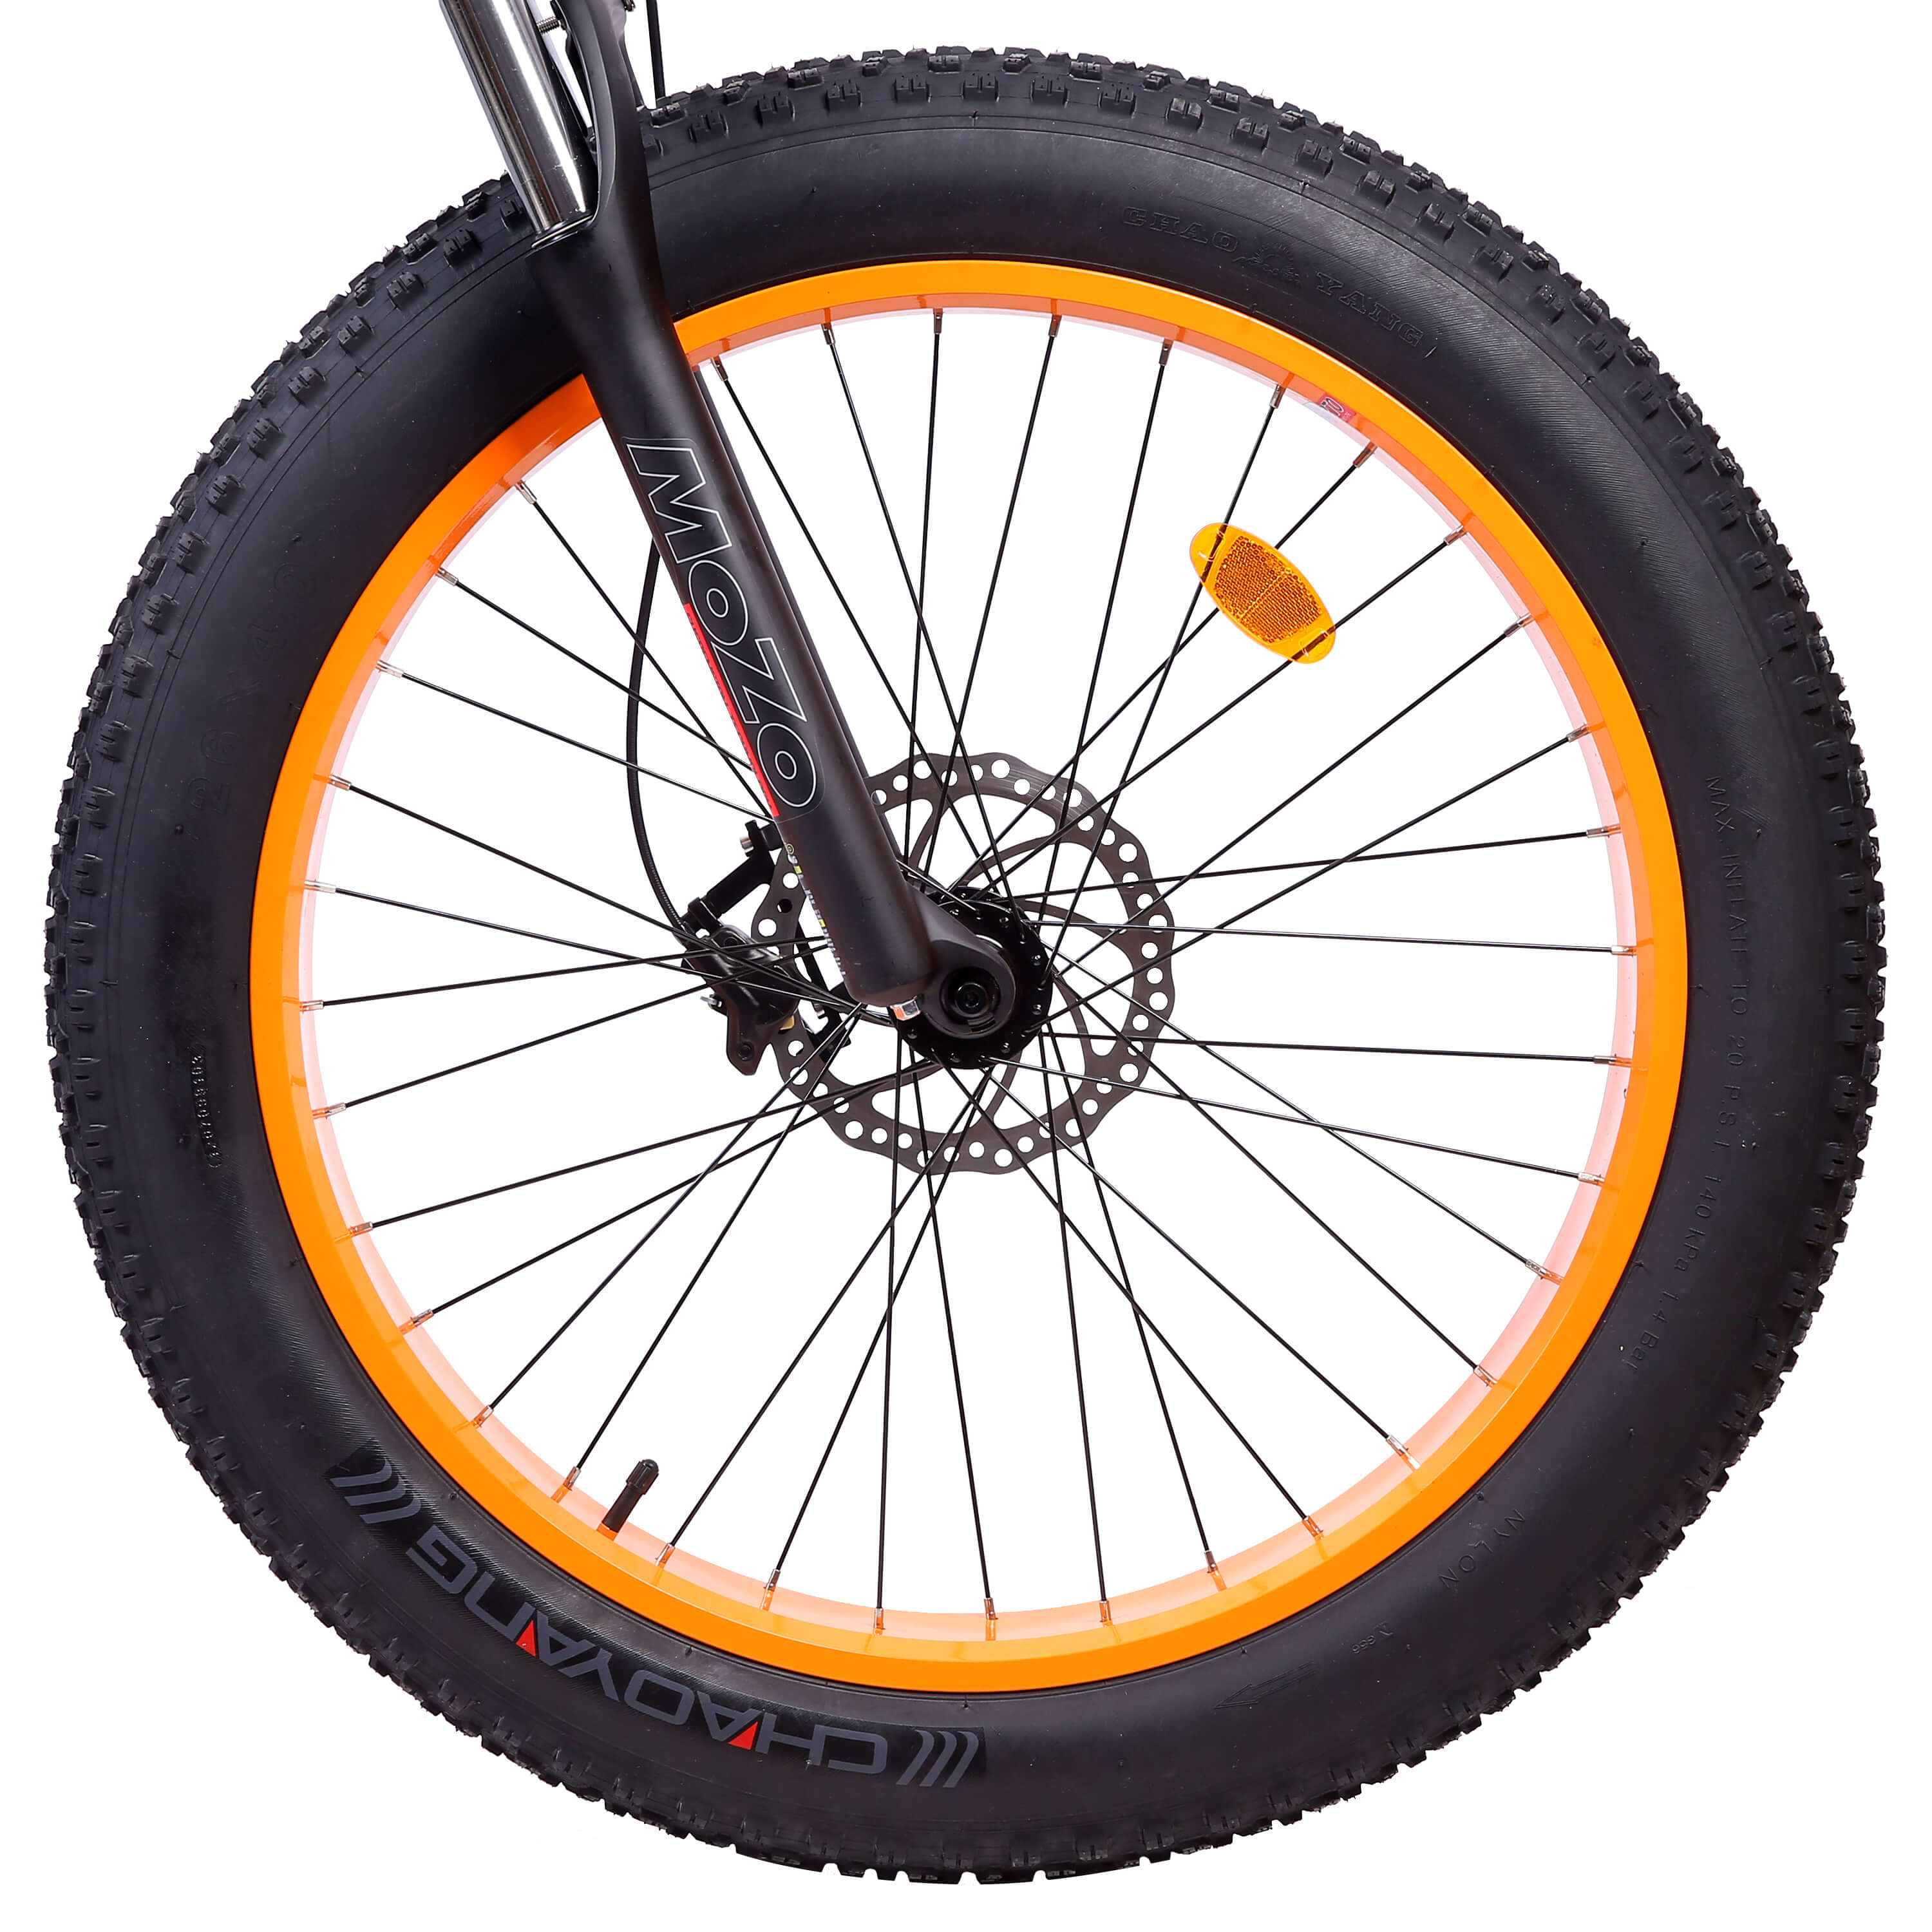 Ecotric Hammer - UL Certified Fat Tire Beach Snow Bike